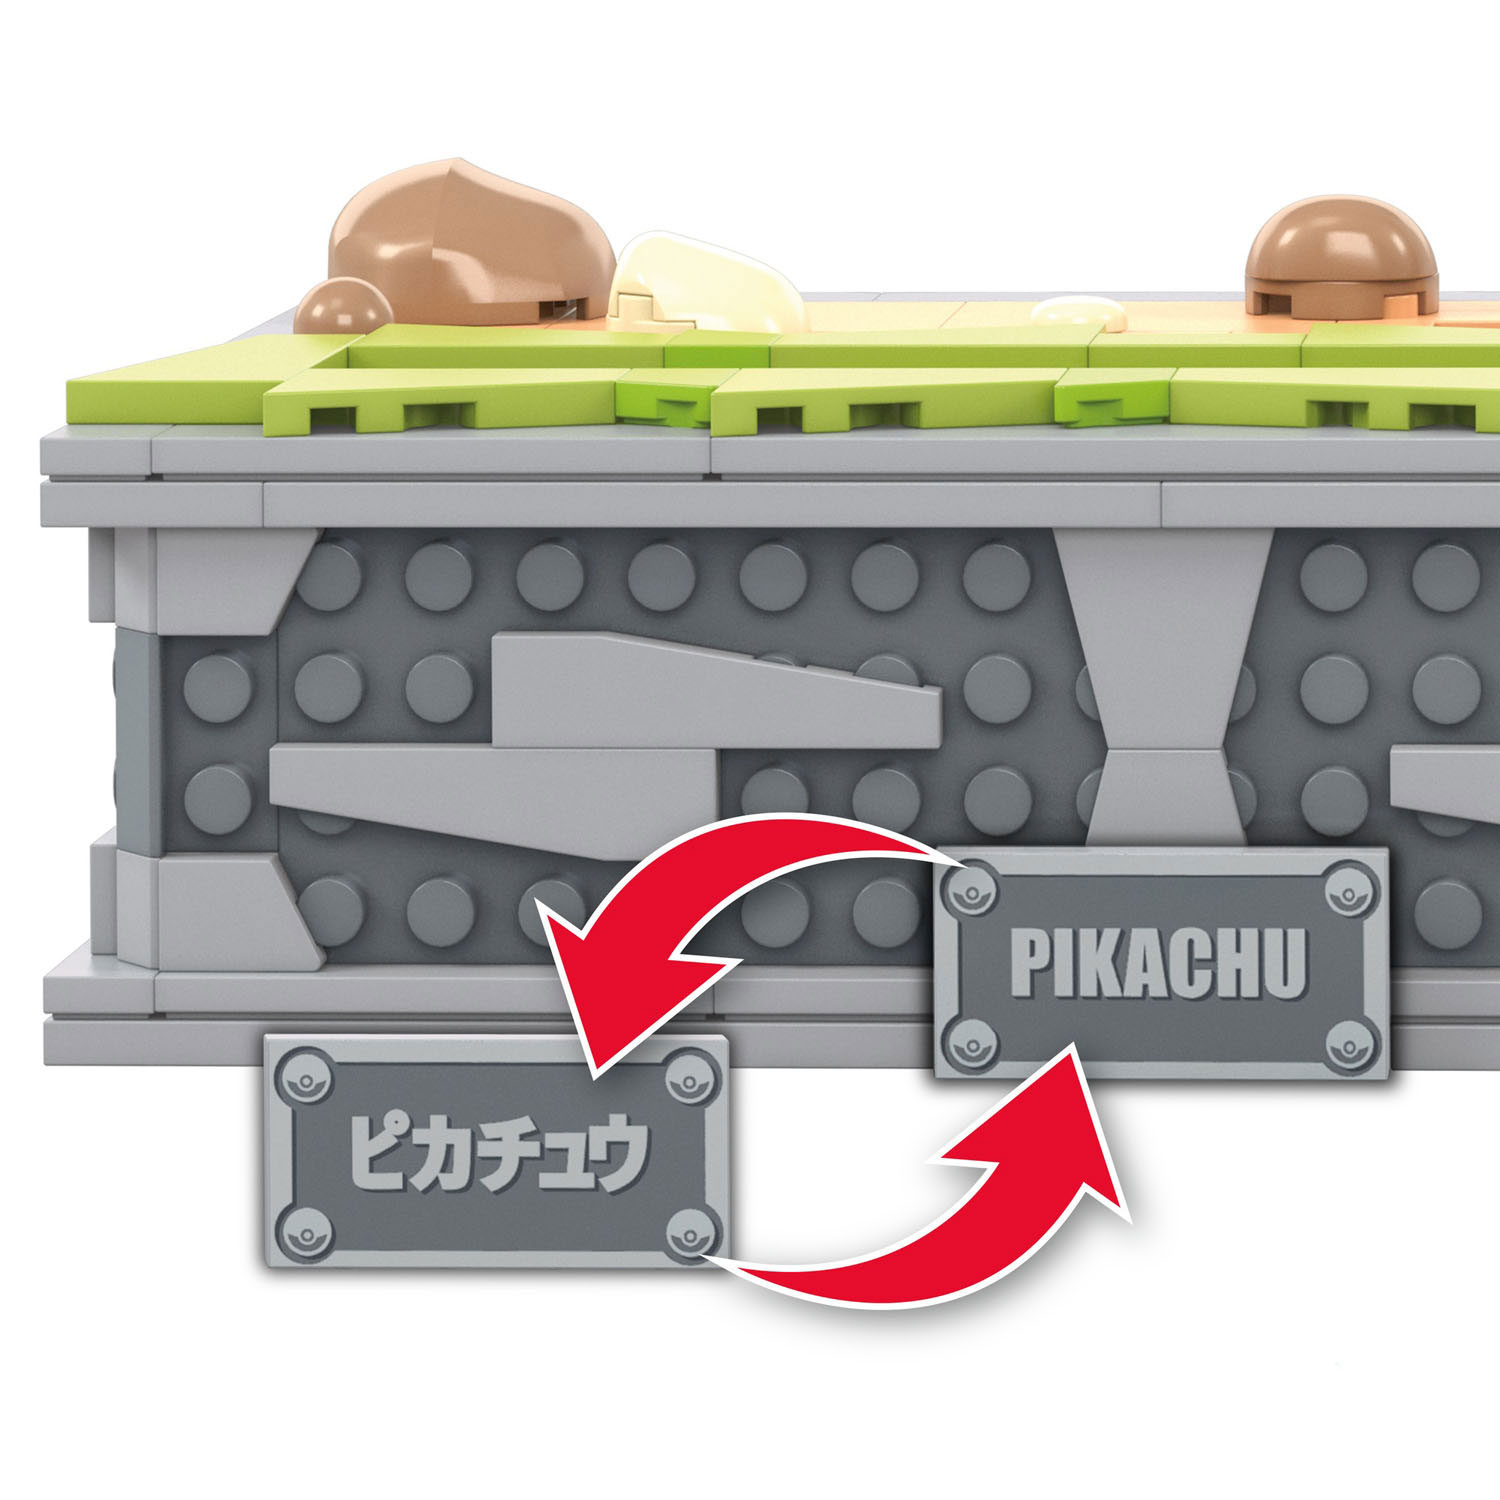 Mega Construx – Pokémon Motion Pikachu